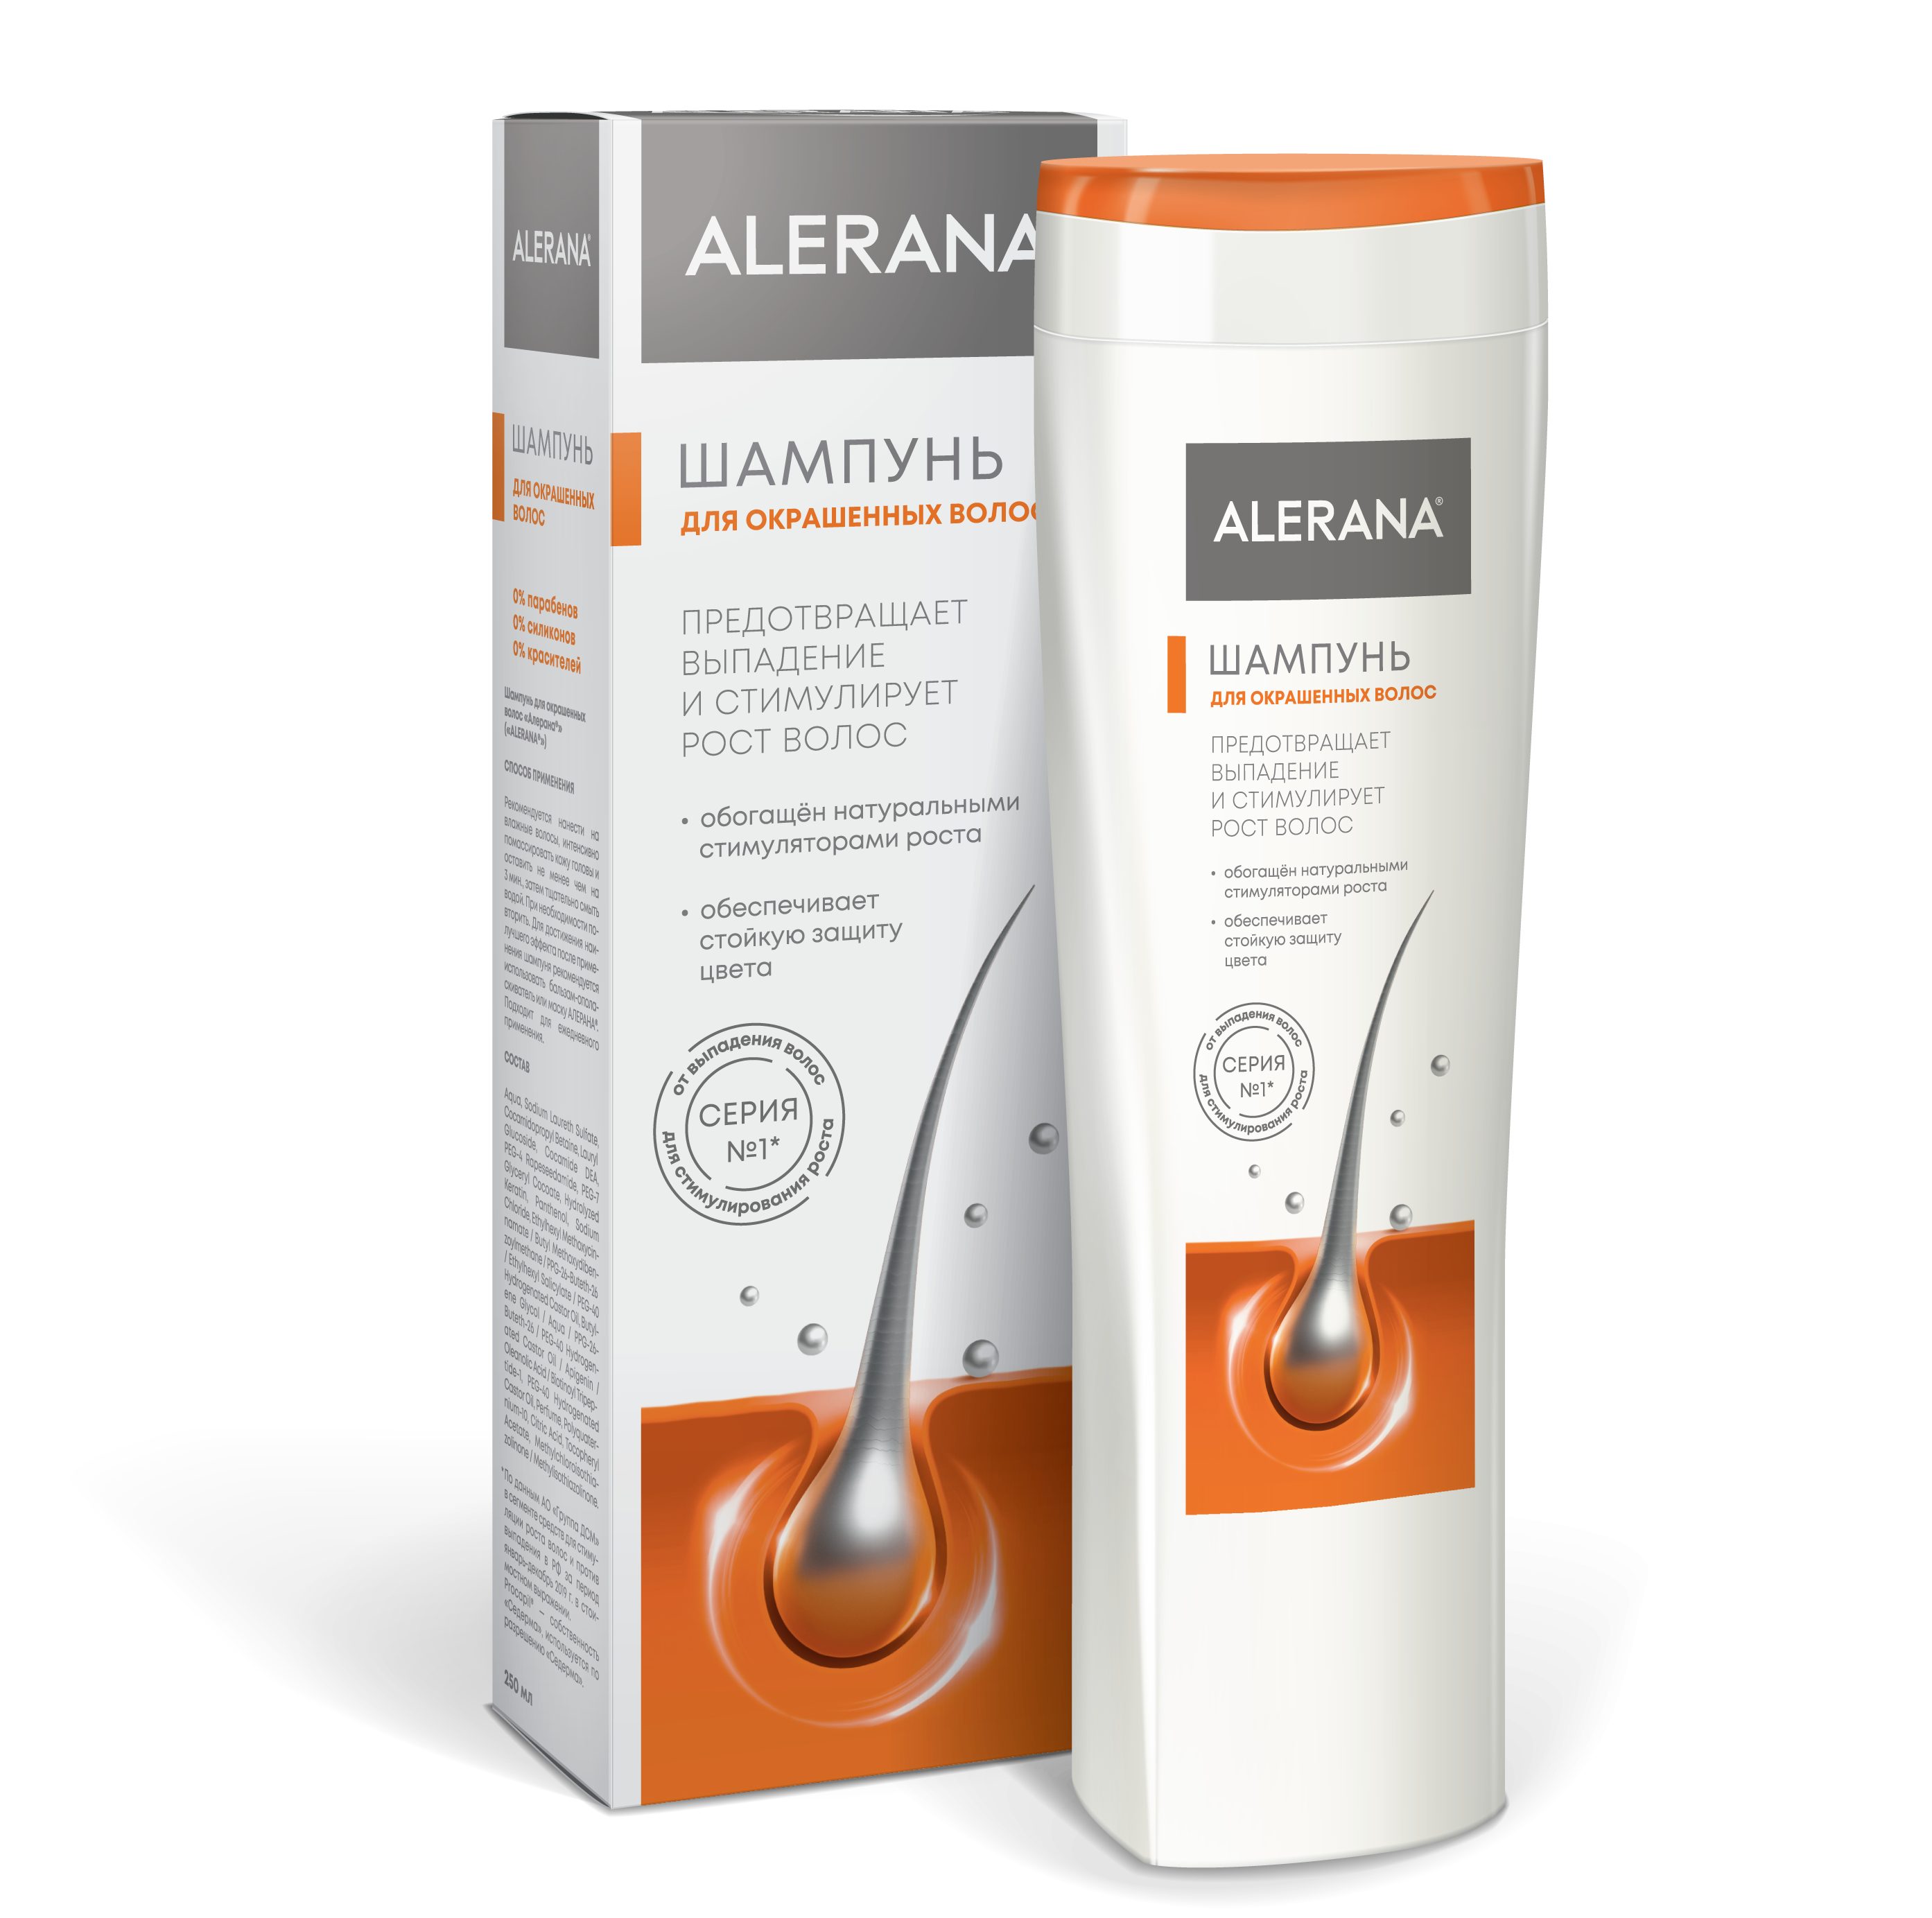 ALERANA<sup>®</sup> Shampoo for colored hair